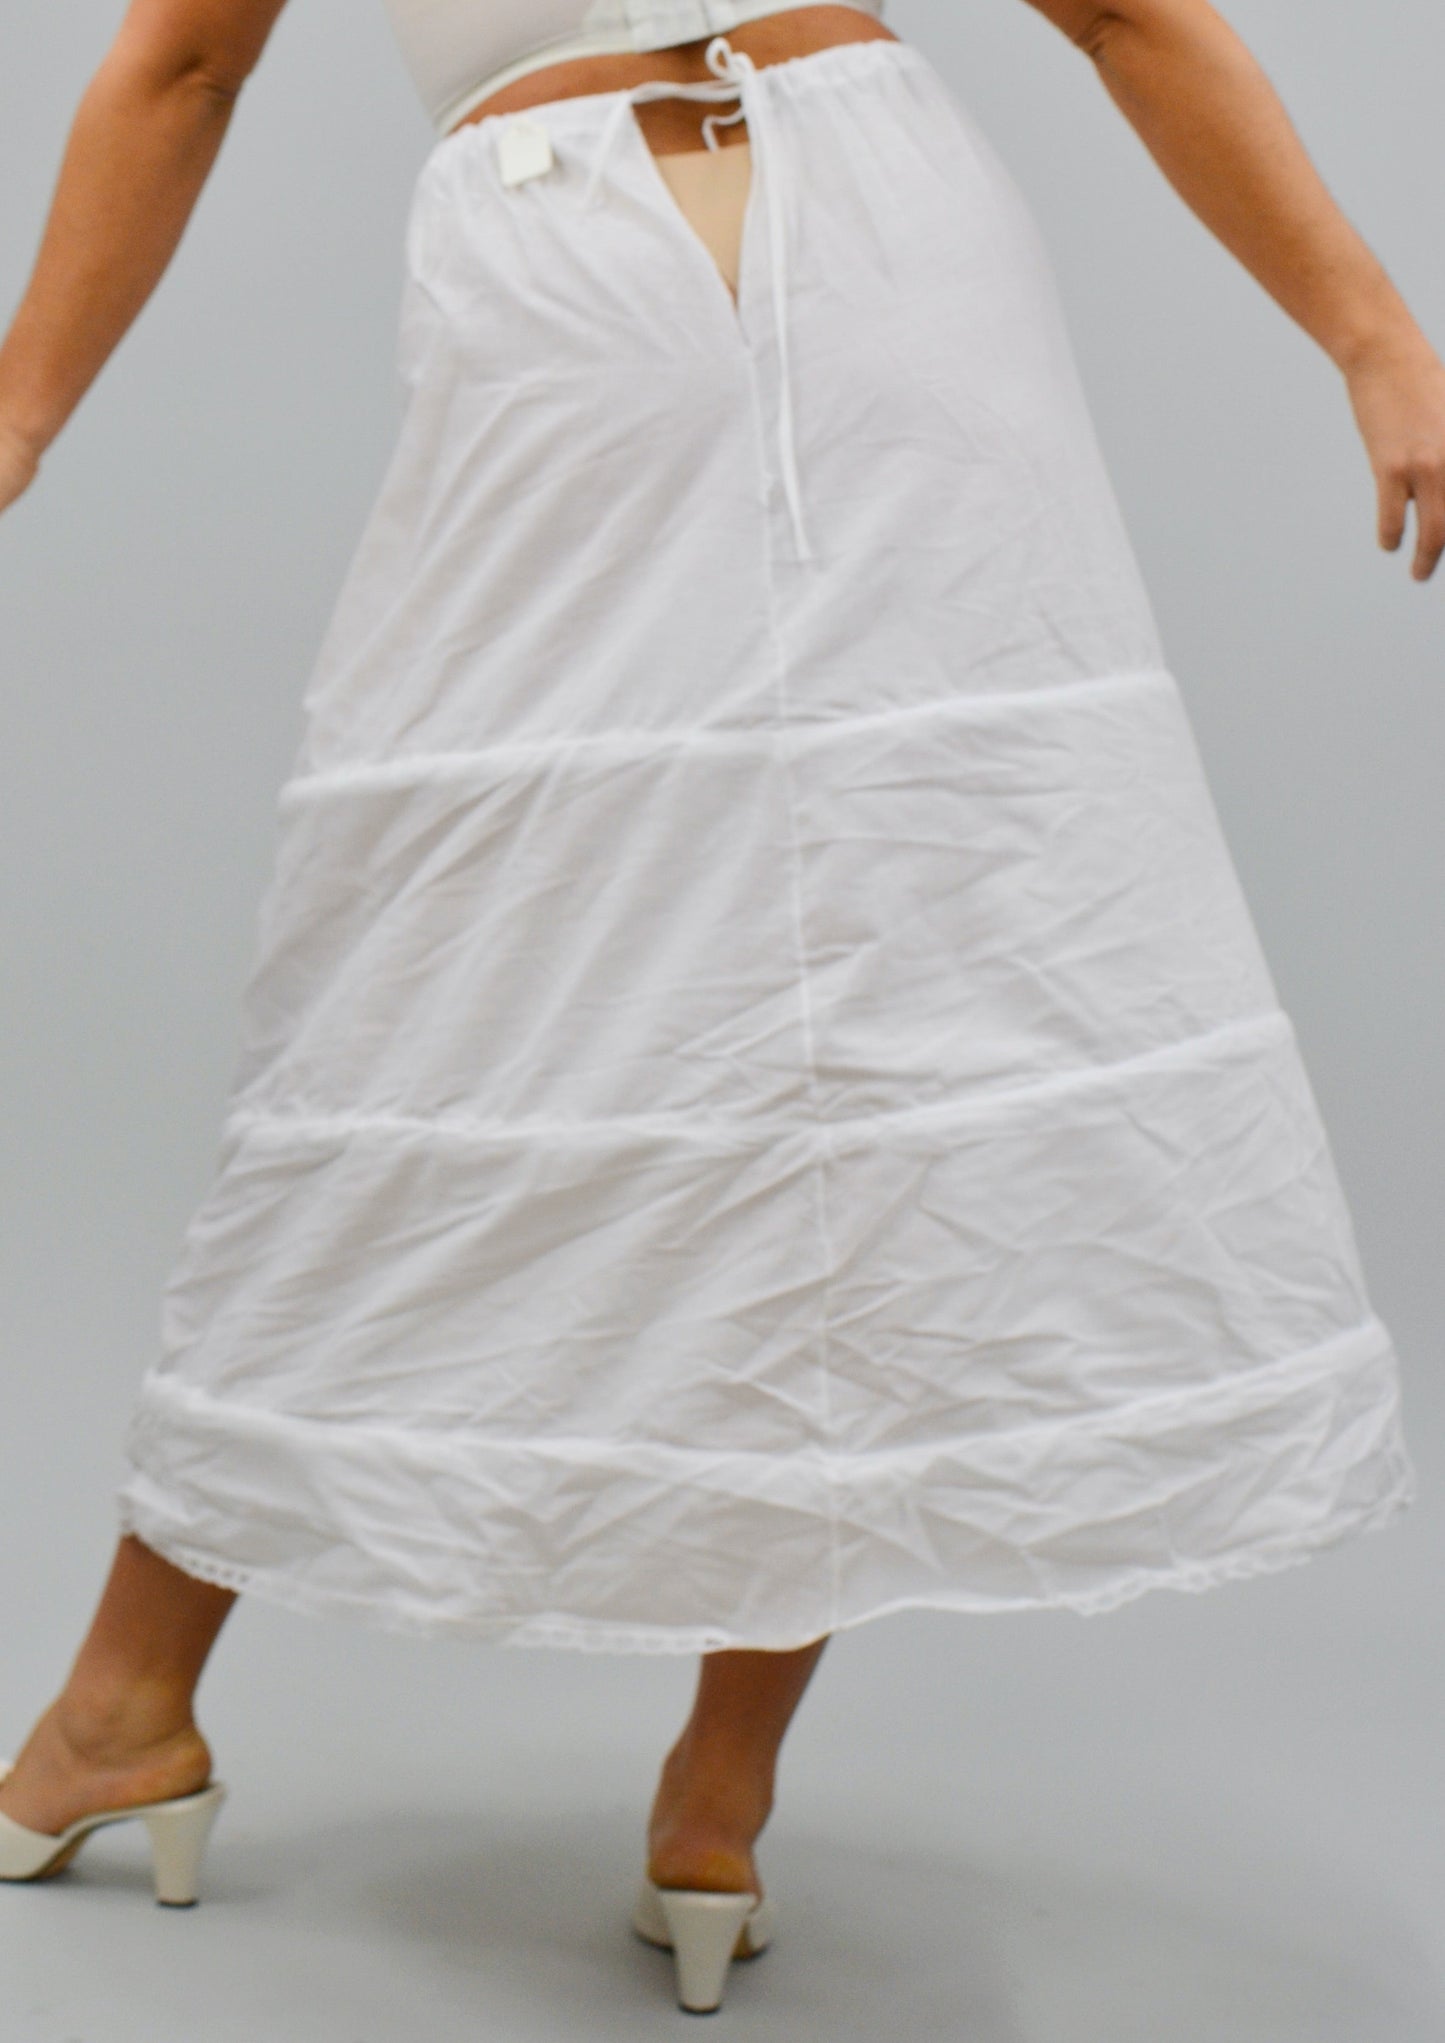 The Veran 3 Bone Cotton Hoop Skirt